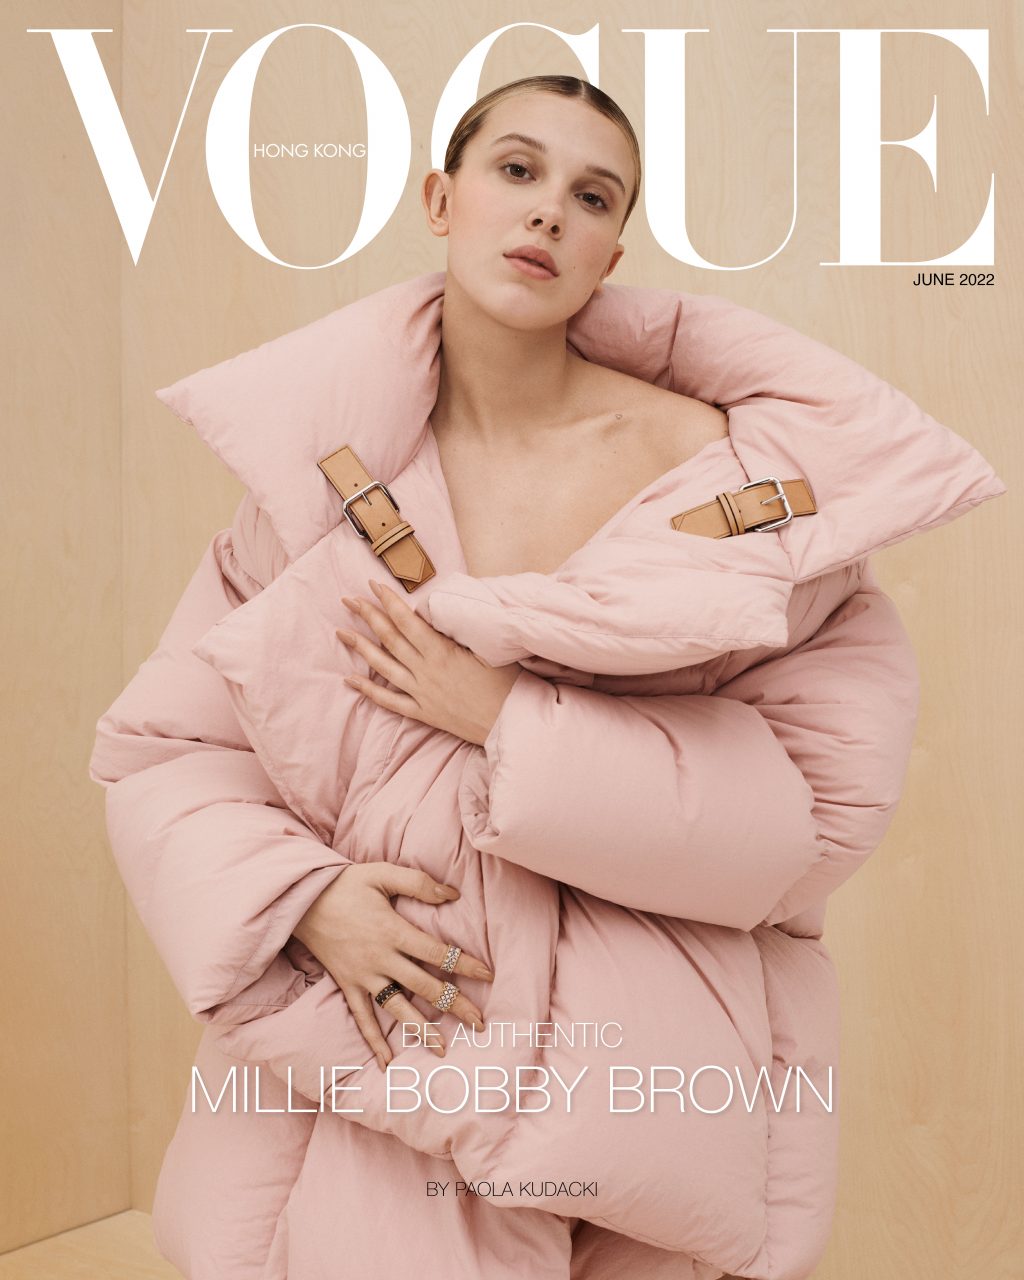 Millie Bobby Brown: rising fashion star